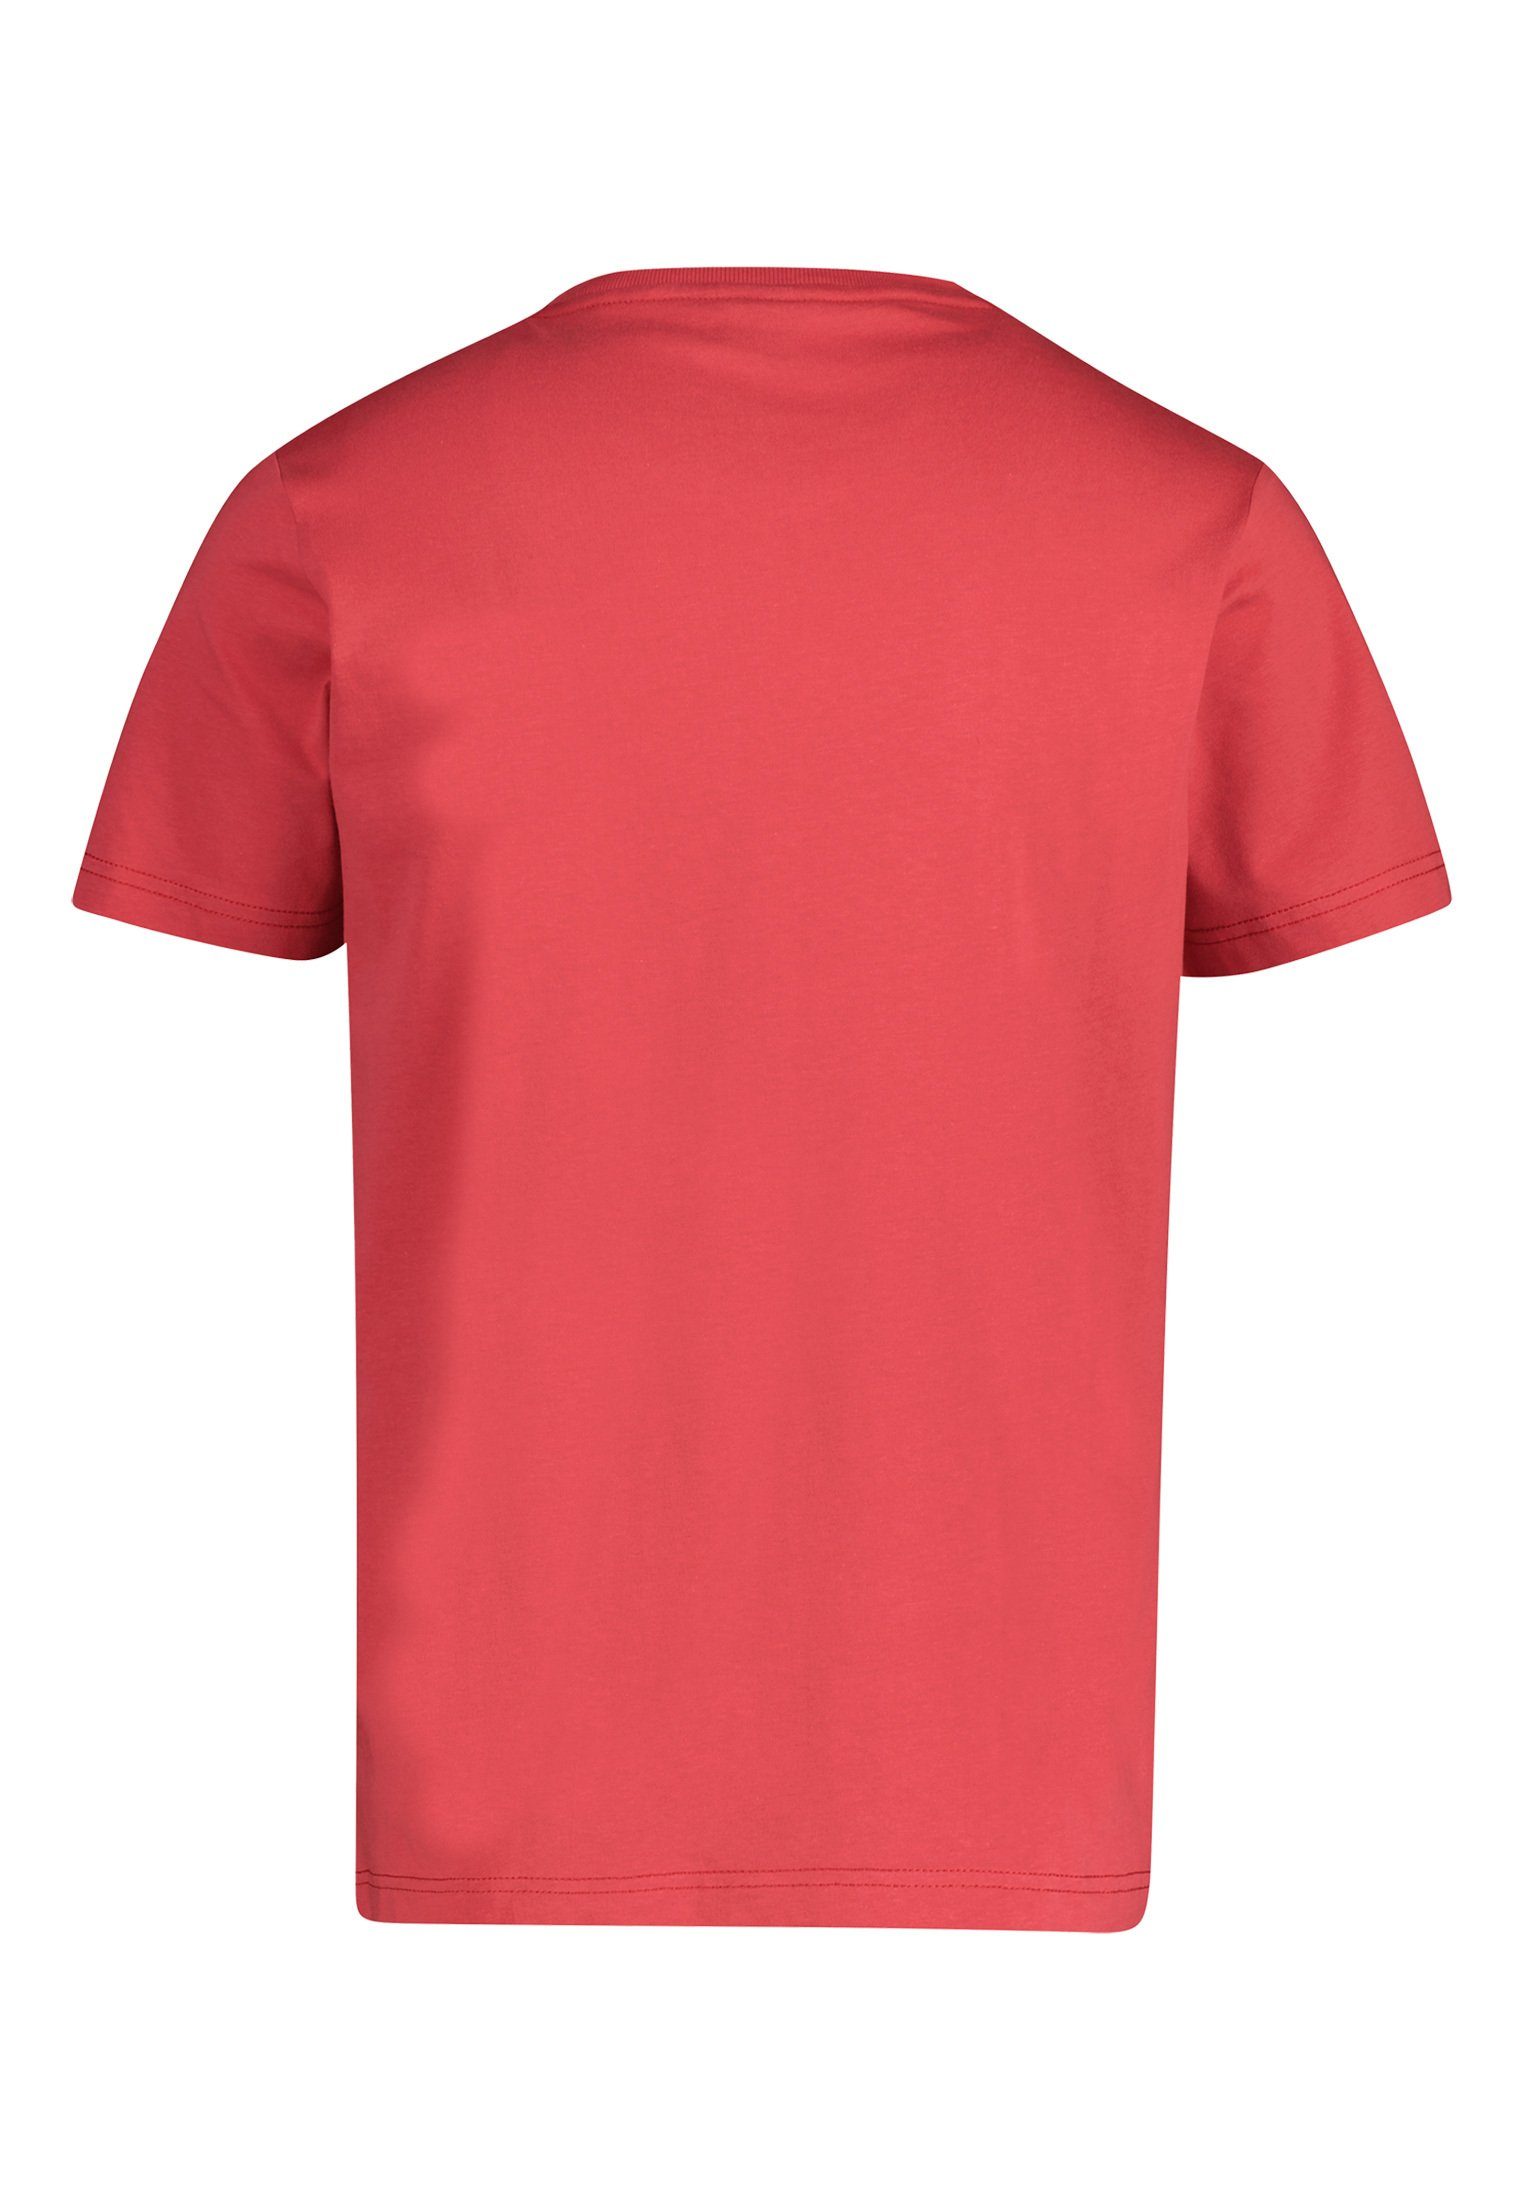 LERROS mit T-Shirt ROSE T-Shirt DUSTY Logo LERROS